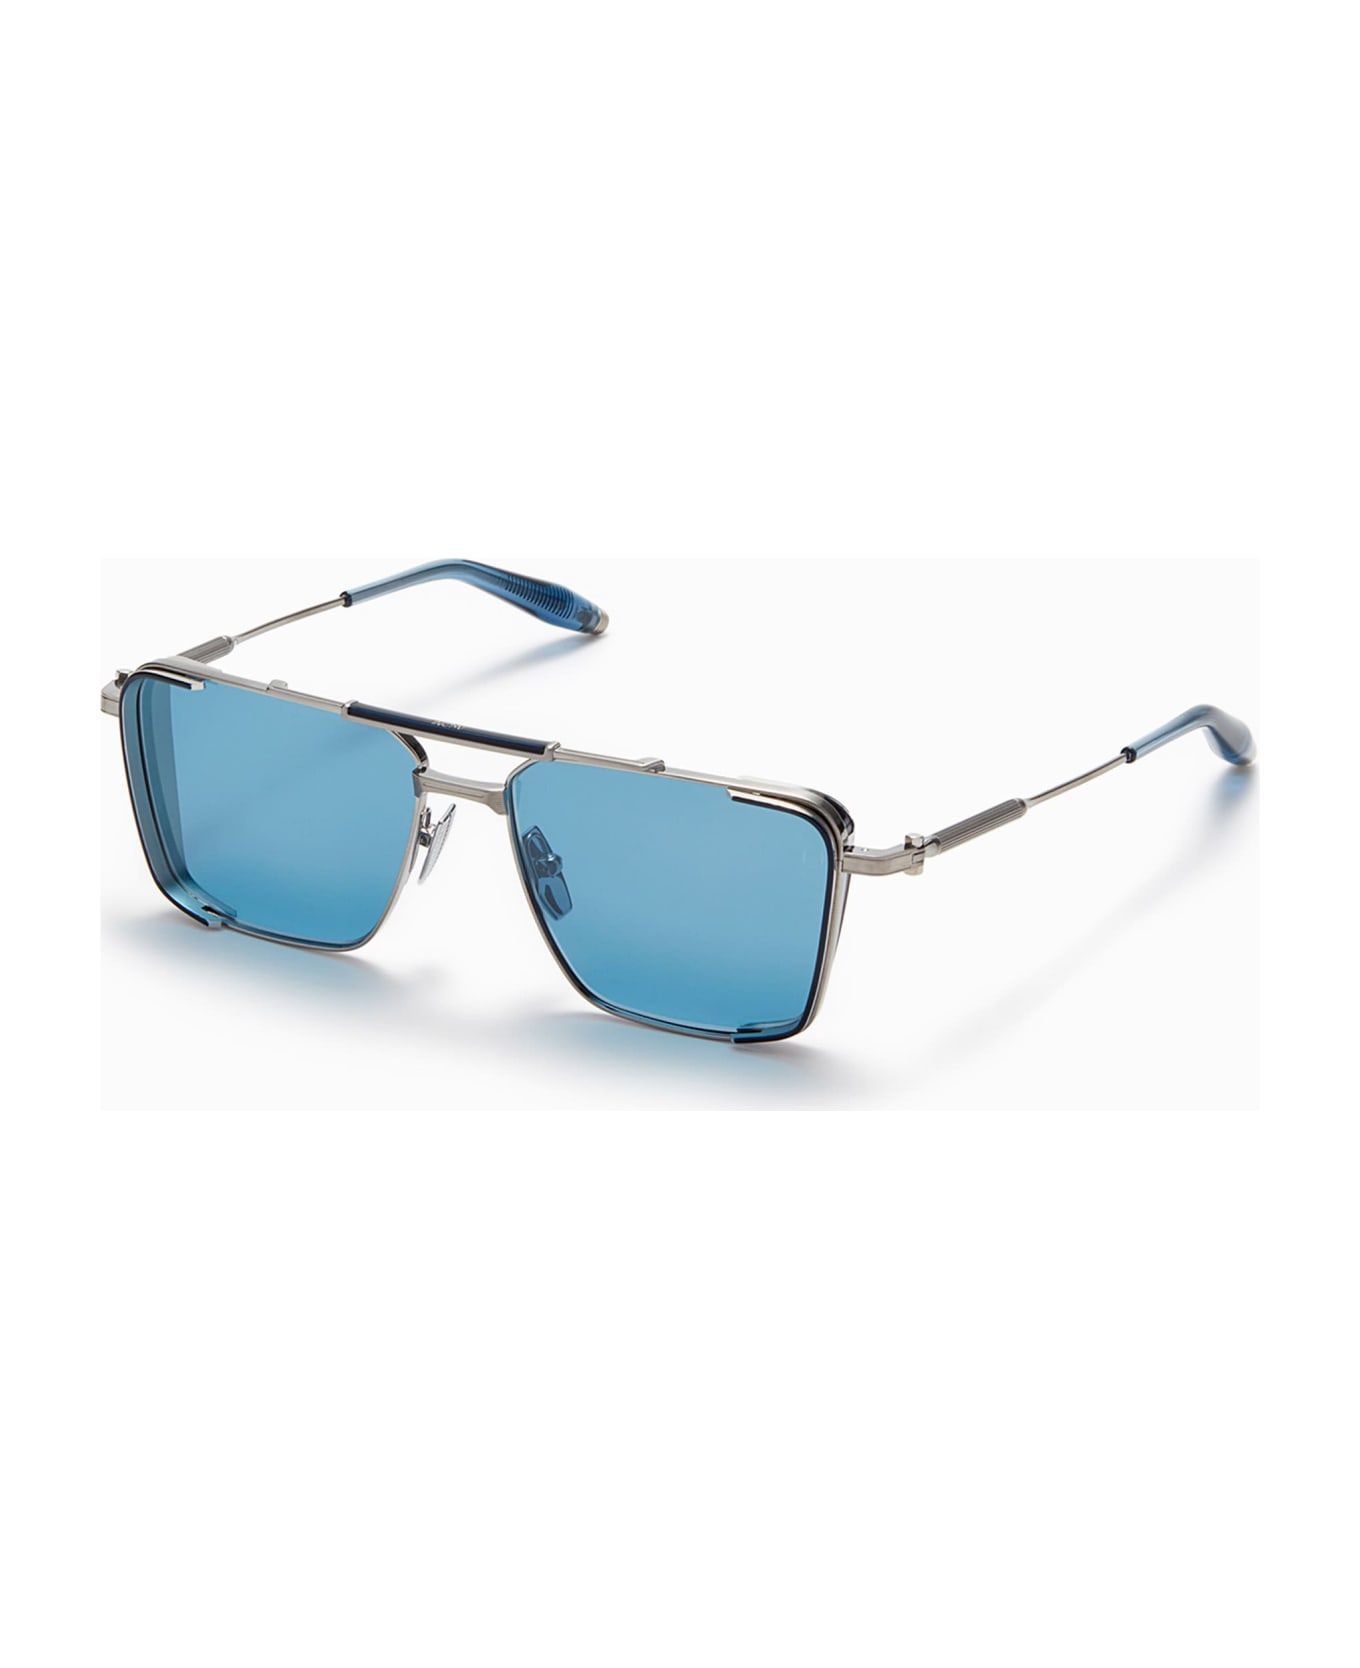 Akoni Hera - Silver / Blue Sunglasses - Silver/blue サングラス